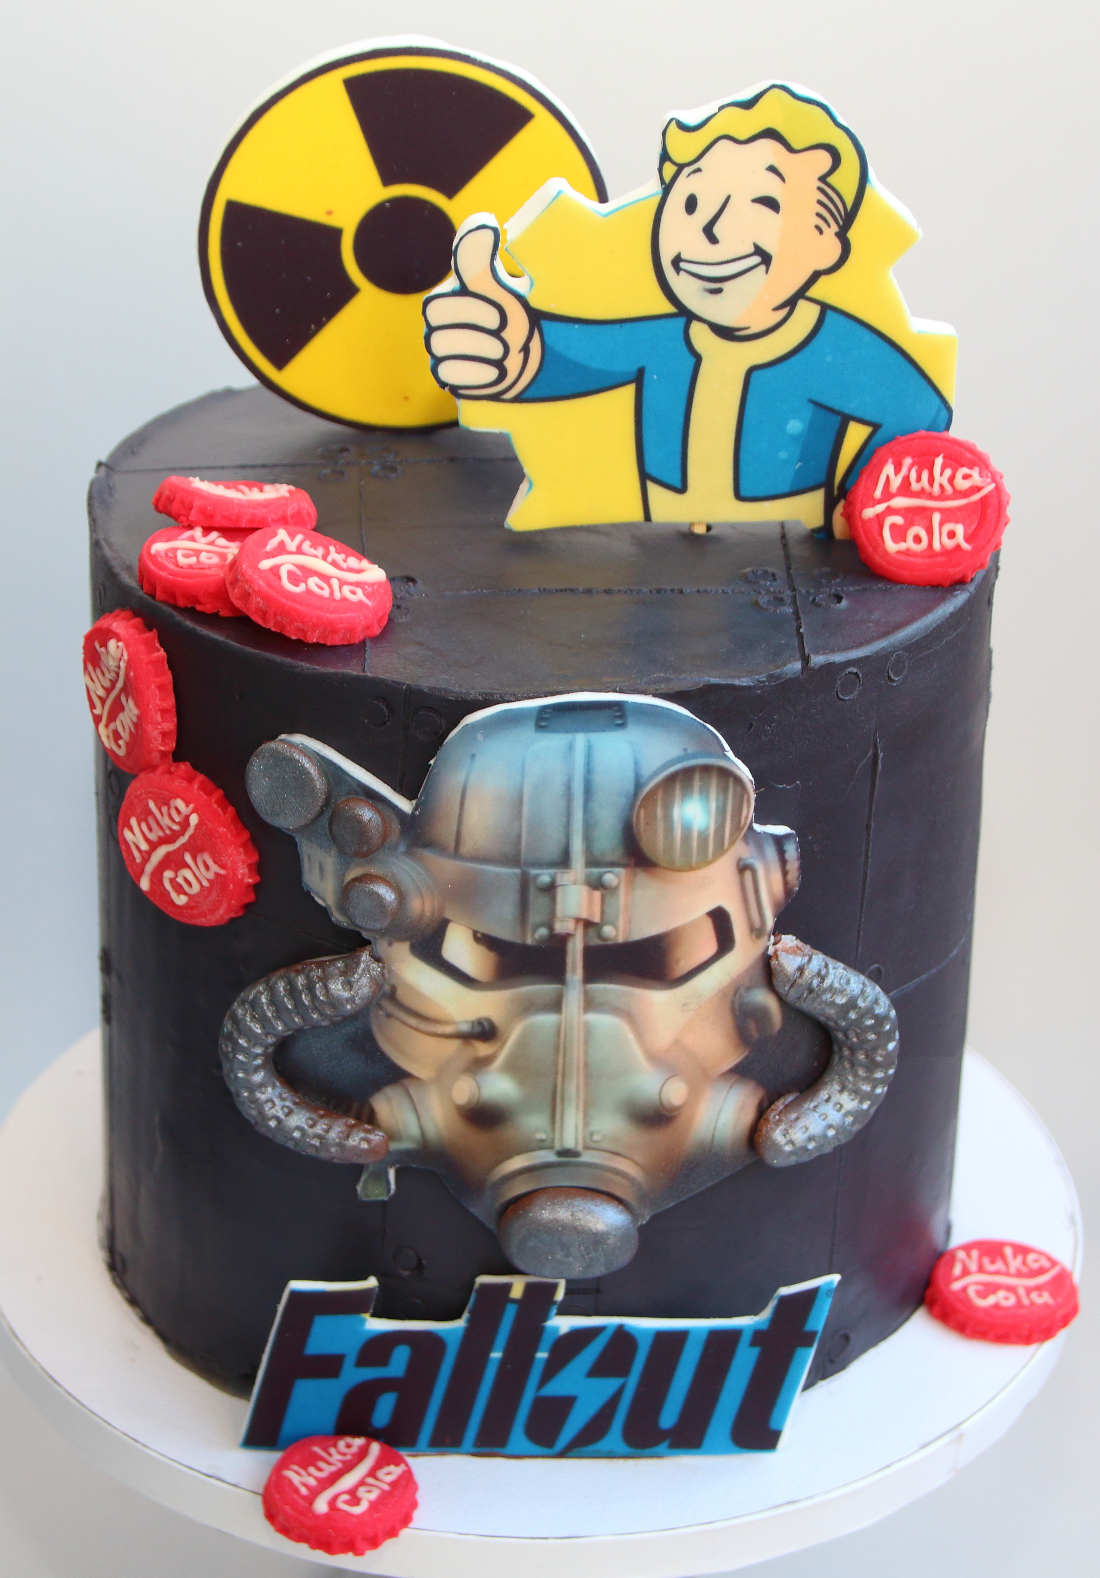 Vault Boy ant Fallout torto ir radioaktyvumo ženklo